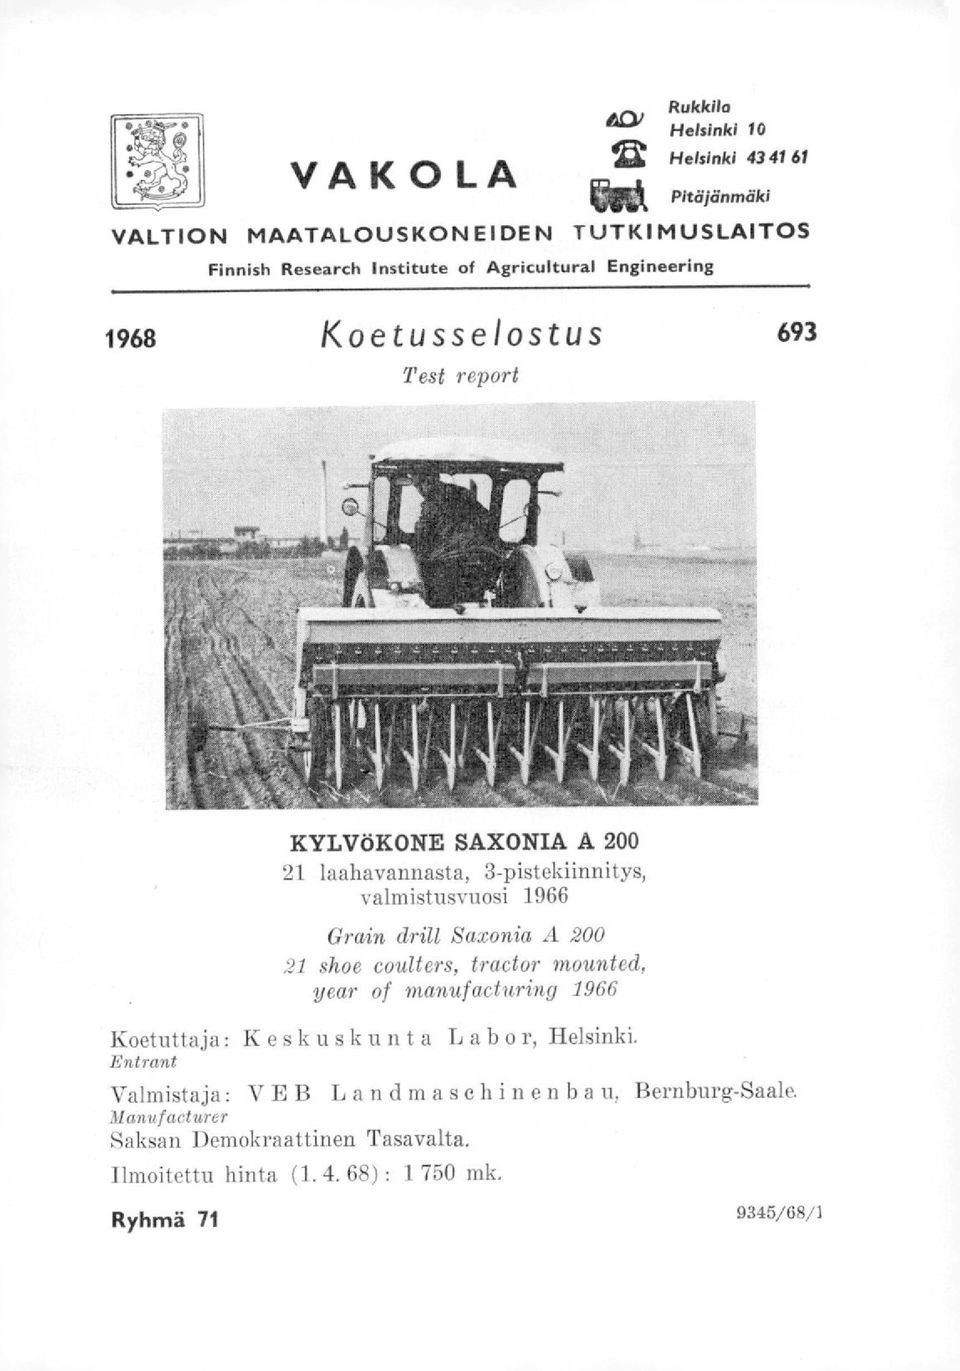 Gralin drill Saxonia A 0 21 shoe coulters, tractor mounted, year of manufacturing 1966 Koetuttaja : K eskuskunt a Labo r, Helsinki.